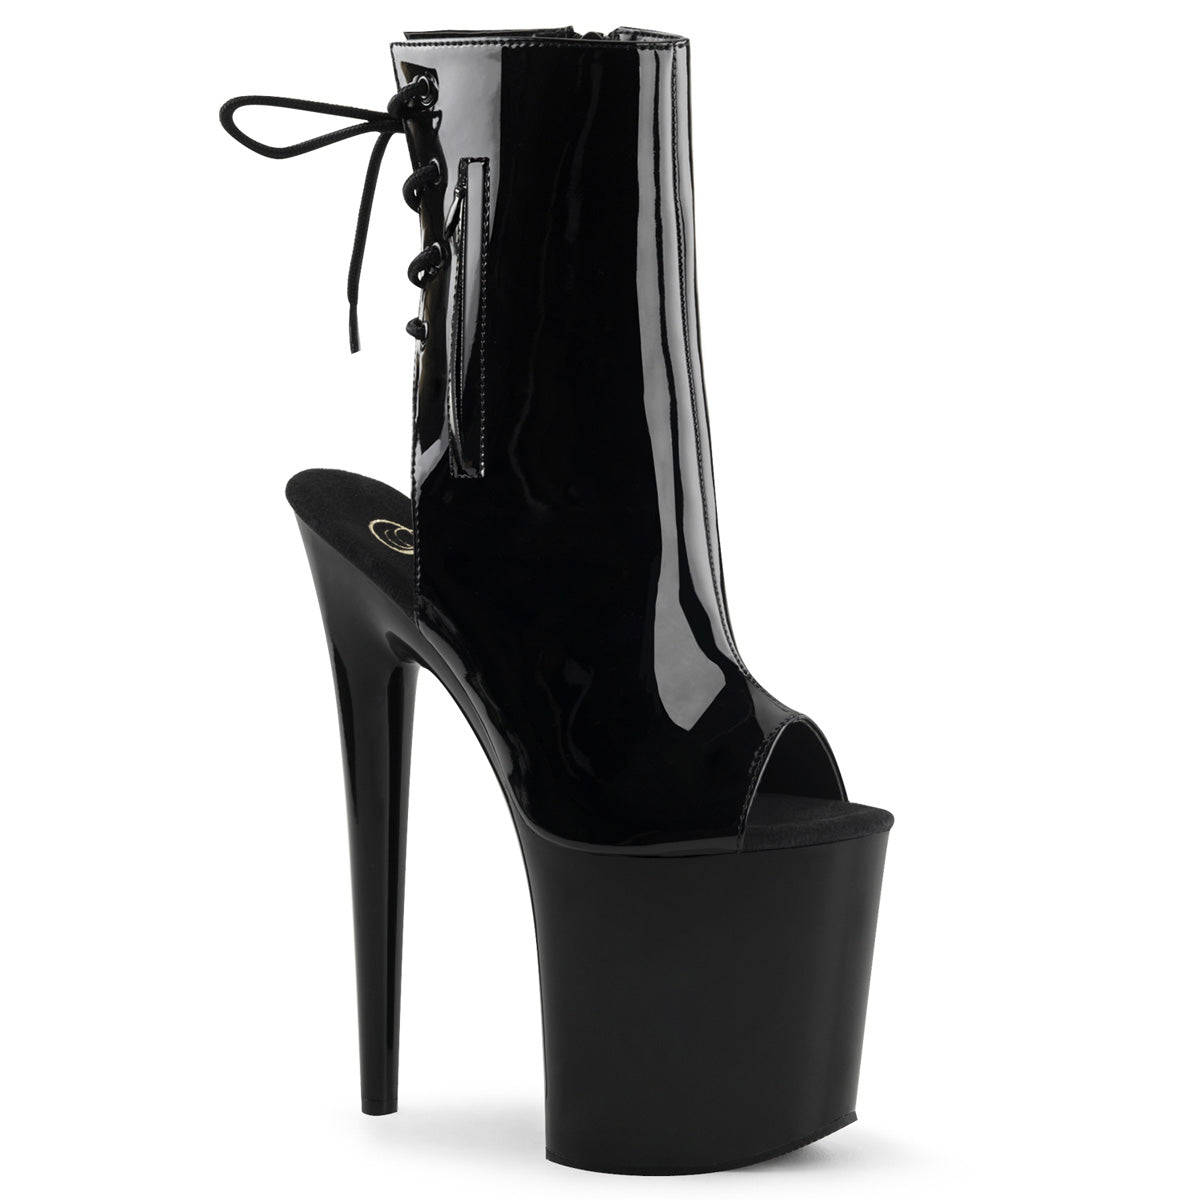 FLAMINGO-1018 8" Heel Black Patent Pole Dancing Platforms-Pleaser- Sexy Shoes